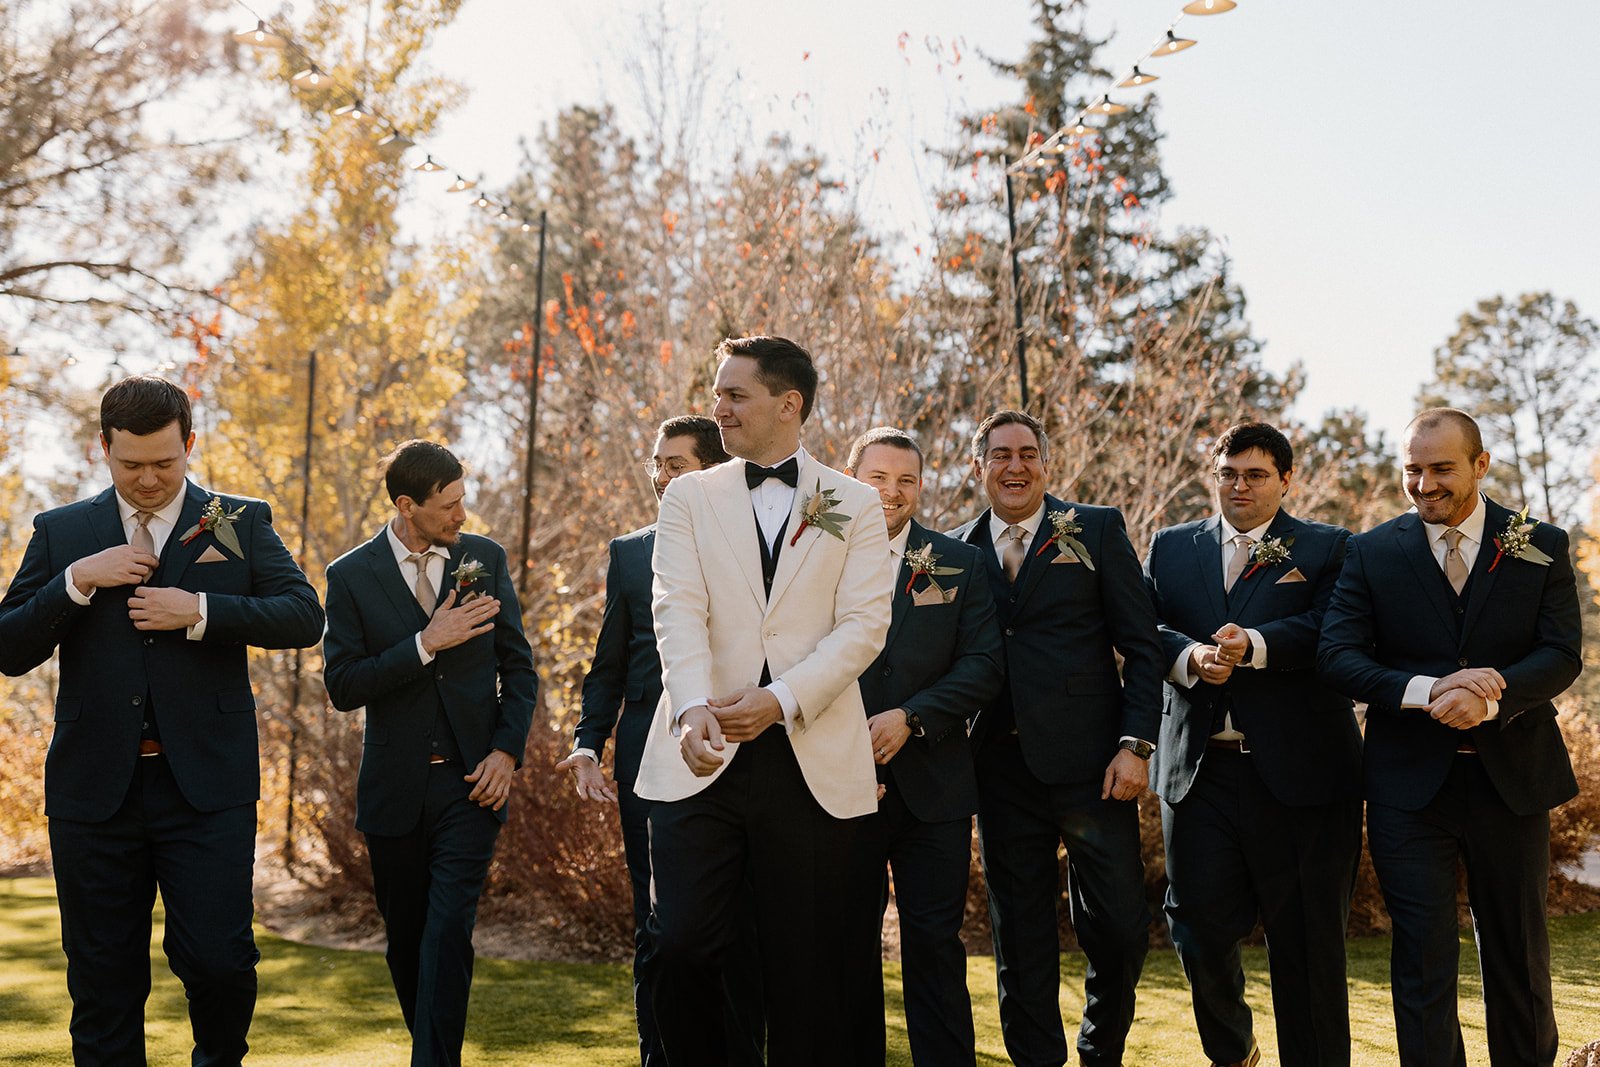 Groom poses with groomsmen before his stunning wedding